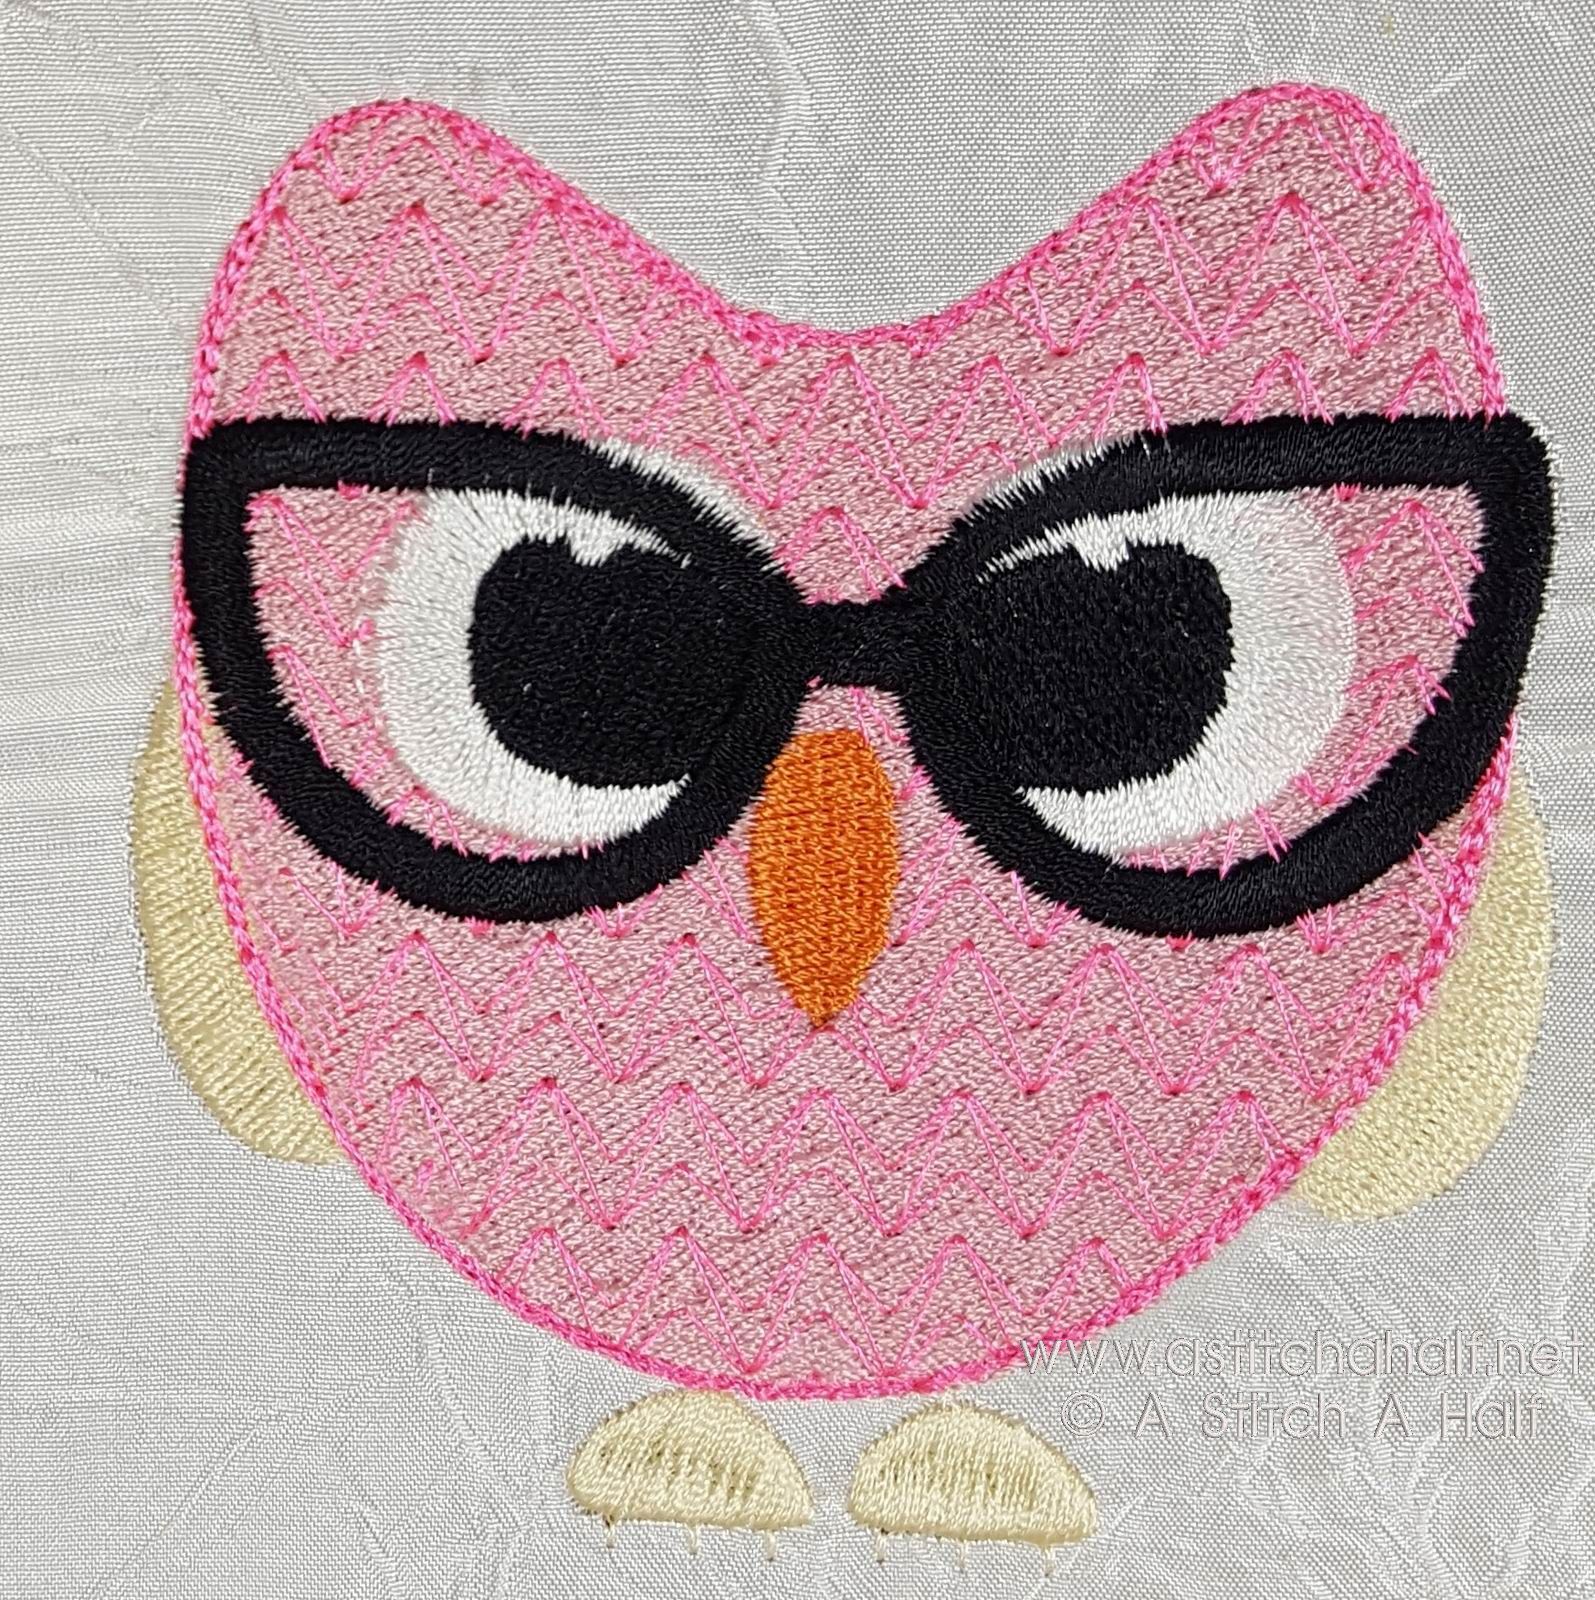 Professor Owl with Glasses - a-stitch-a-half